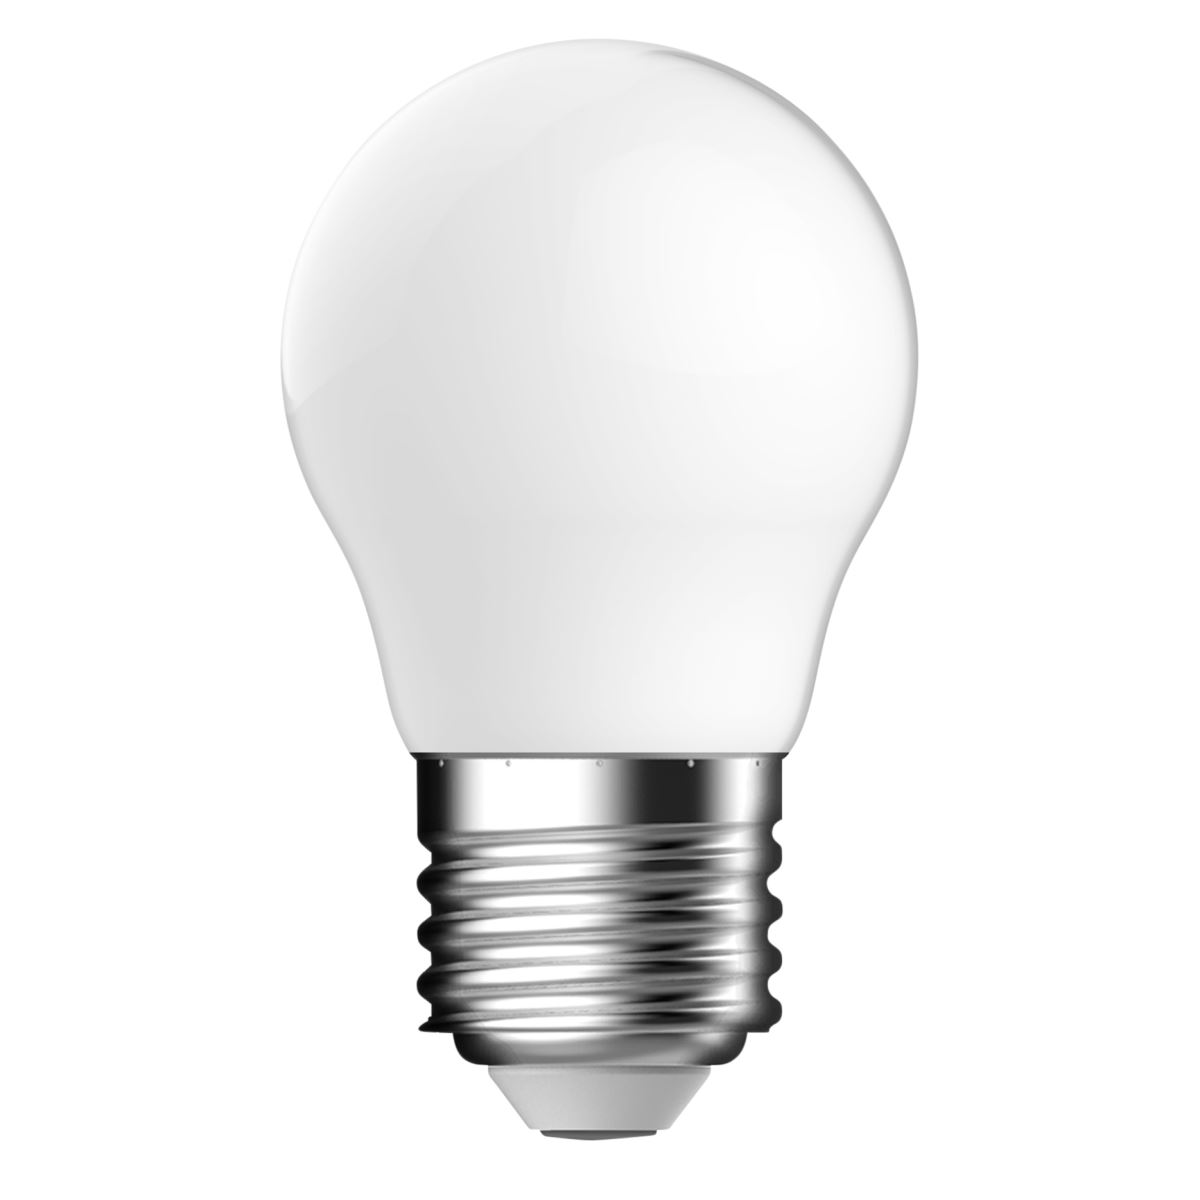 Nordlux Energetic LED Leuchtmittel E27 G45 Filament weiß 470lm 2700K 4,6W 80Ra 360° dimmbar 4,5x4,5x7,9cm von Energetic